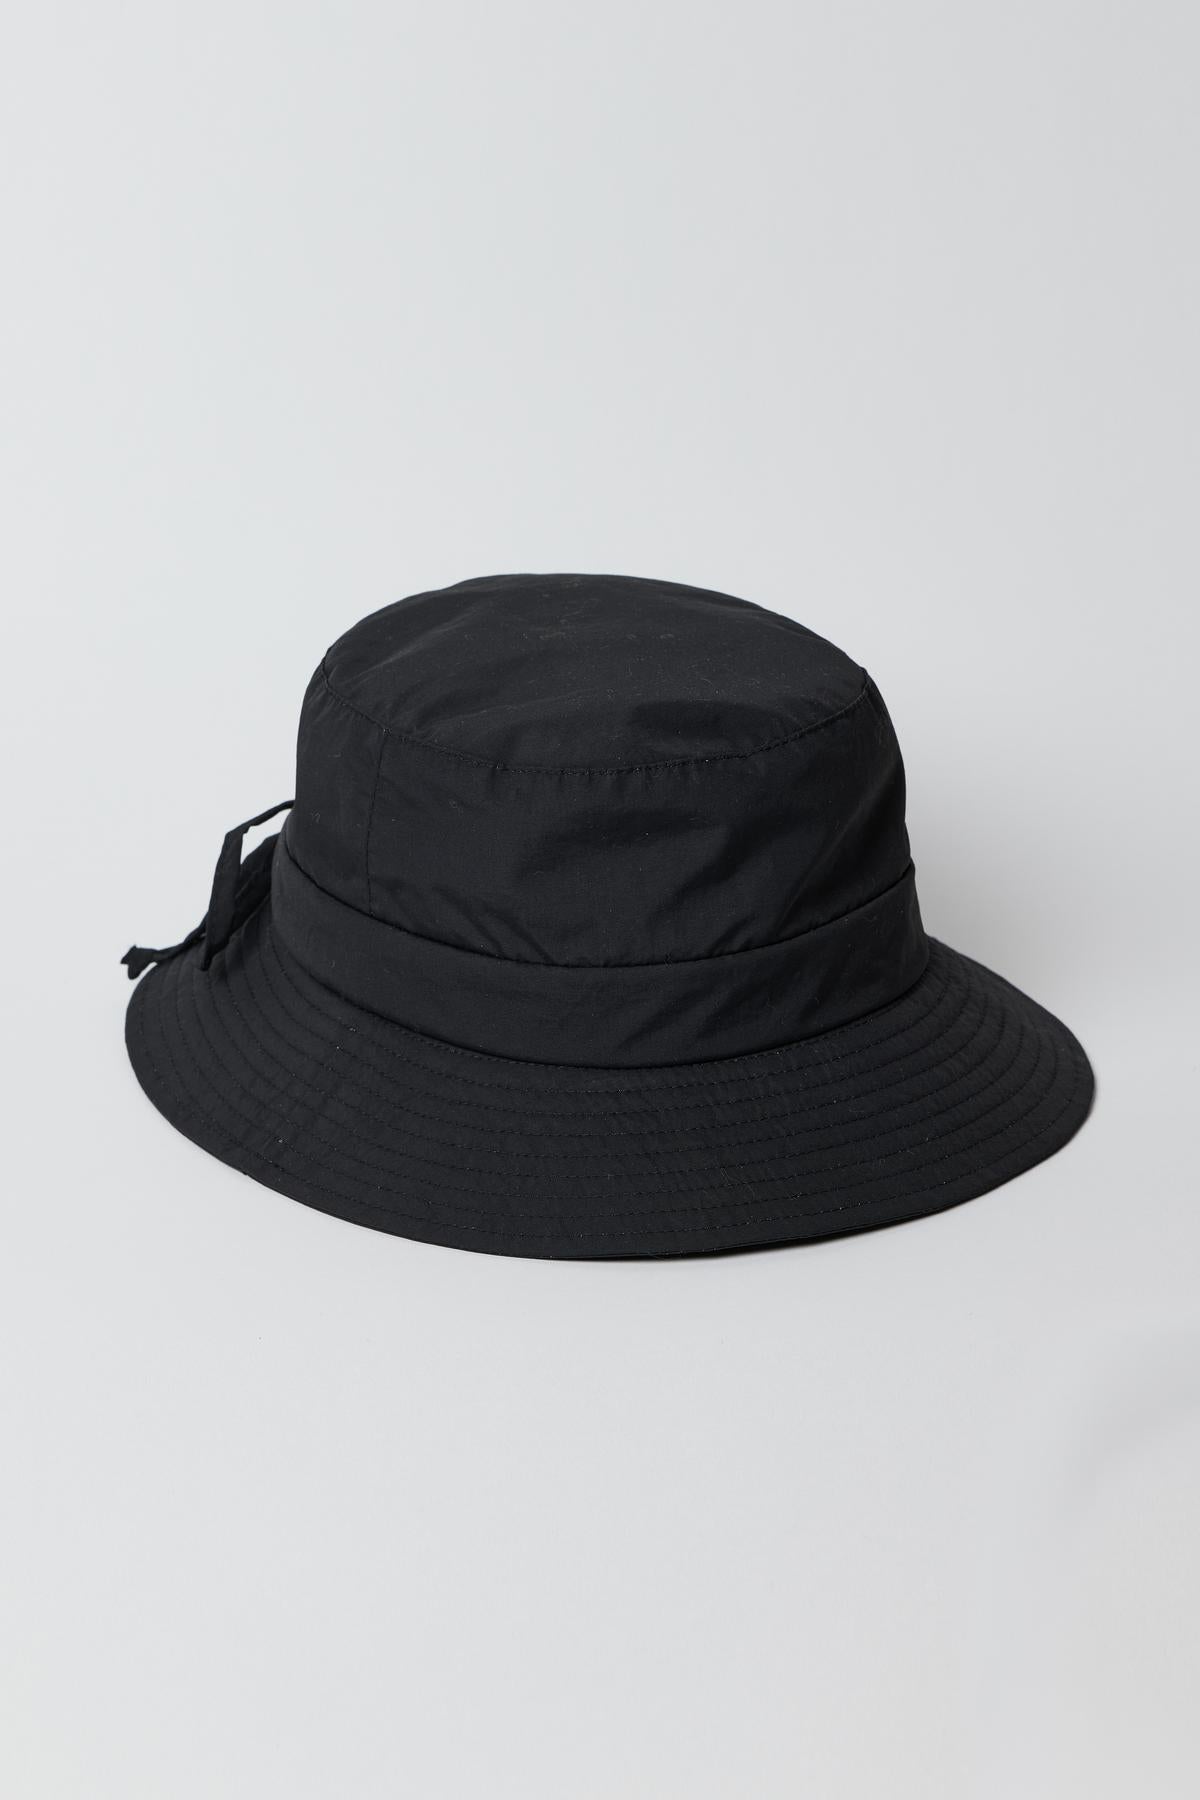   Black Rain Hat 